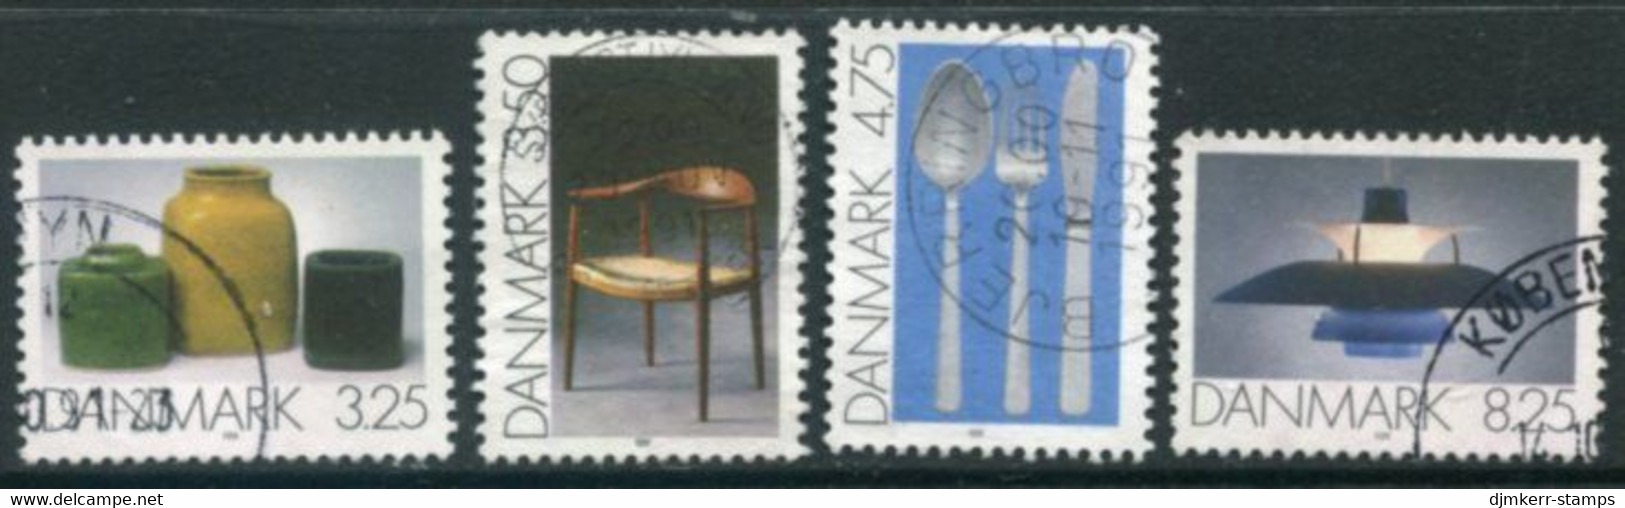 DENMARK 1991 Functional Art Used.   Michel 1006-09 - Usado